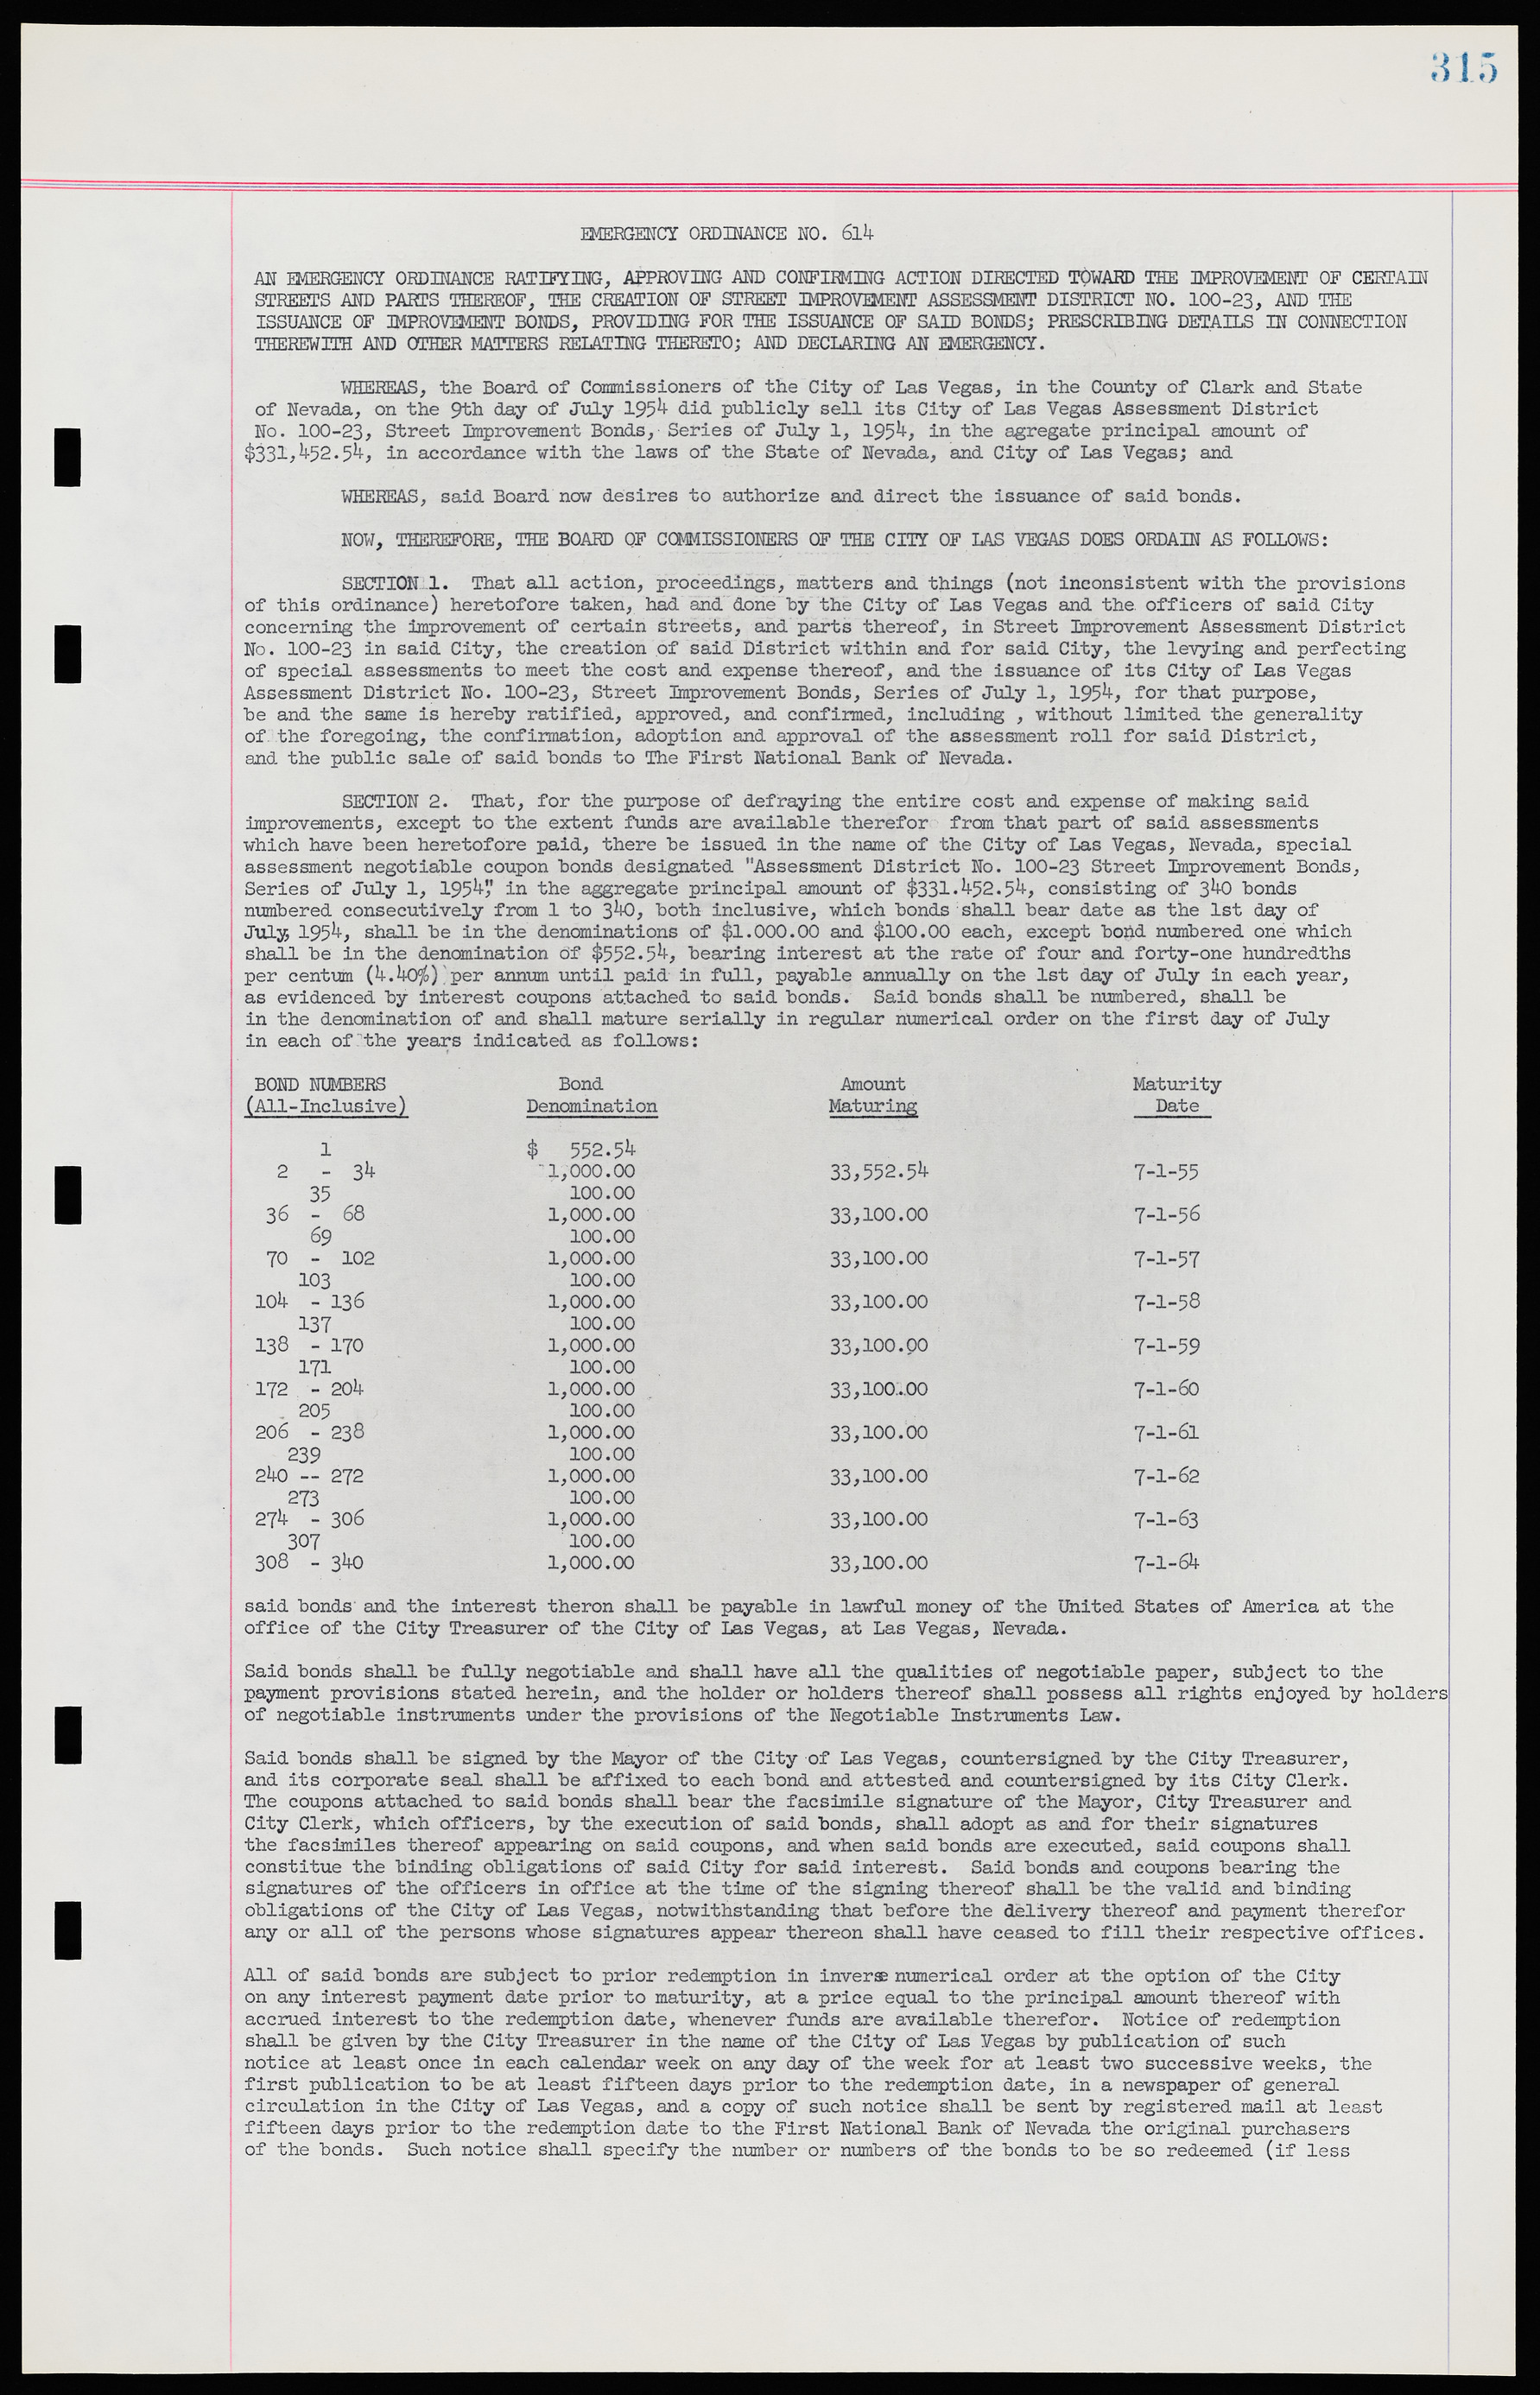 Las Vegas City Ordinances, November 13, 1950 to August 6, 1958, lvc000015-323